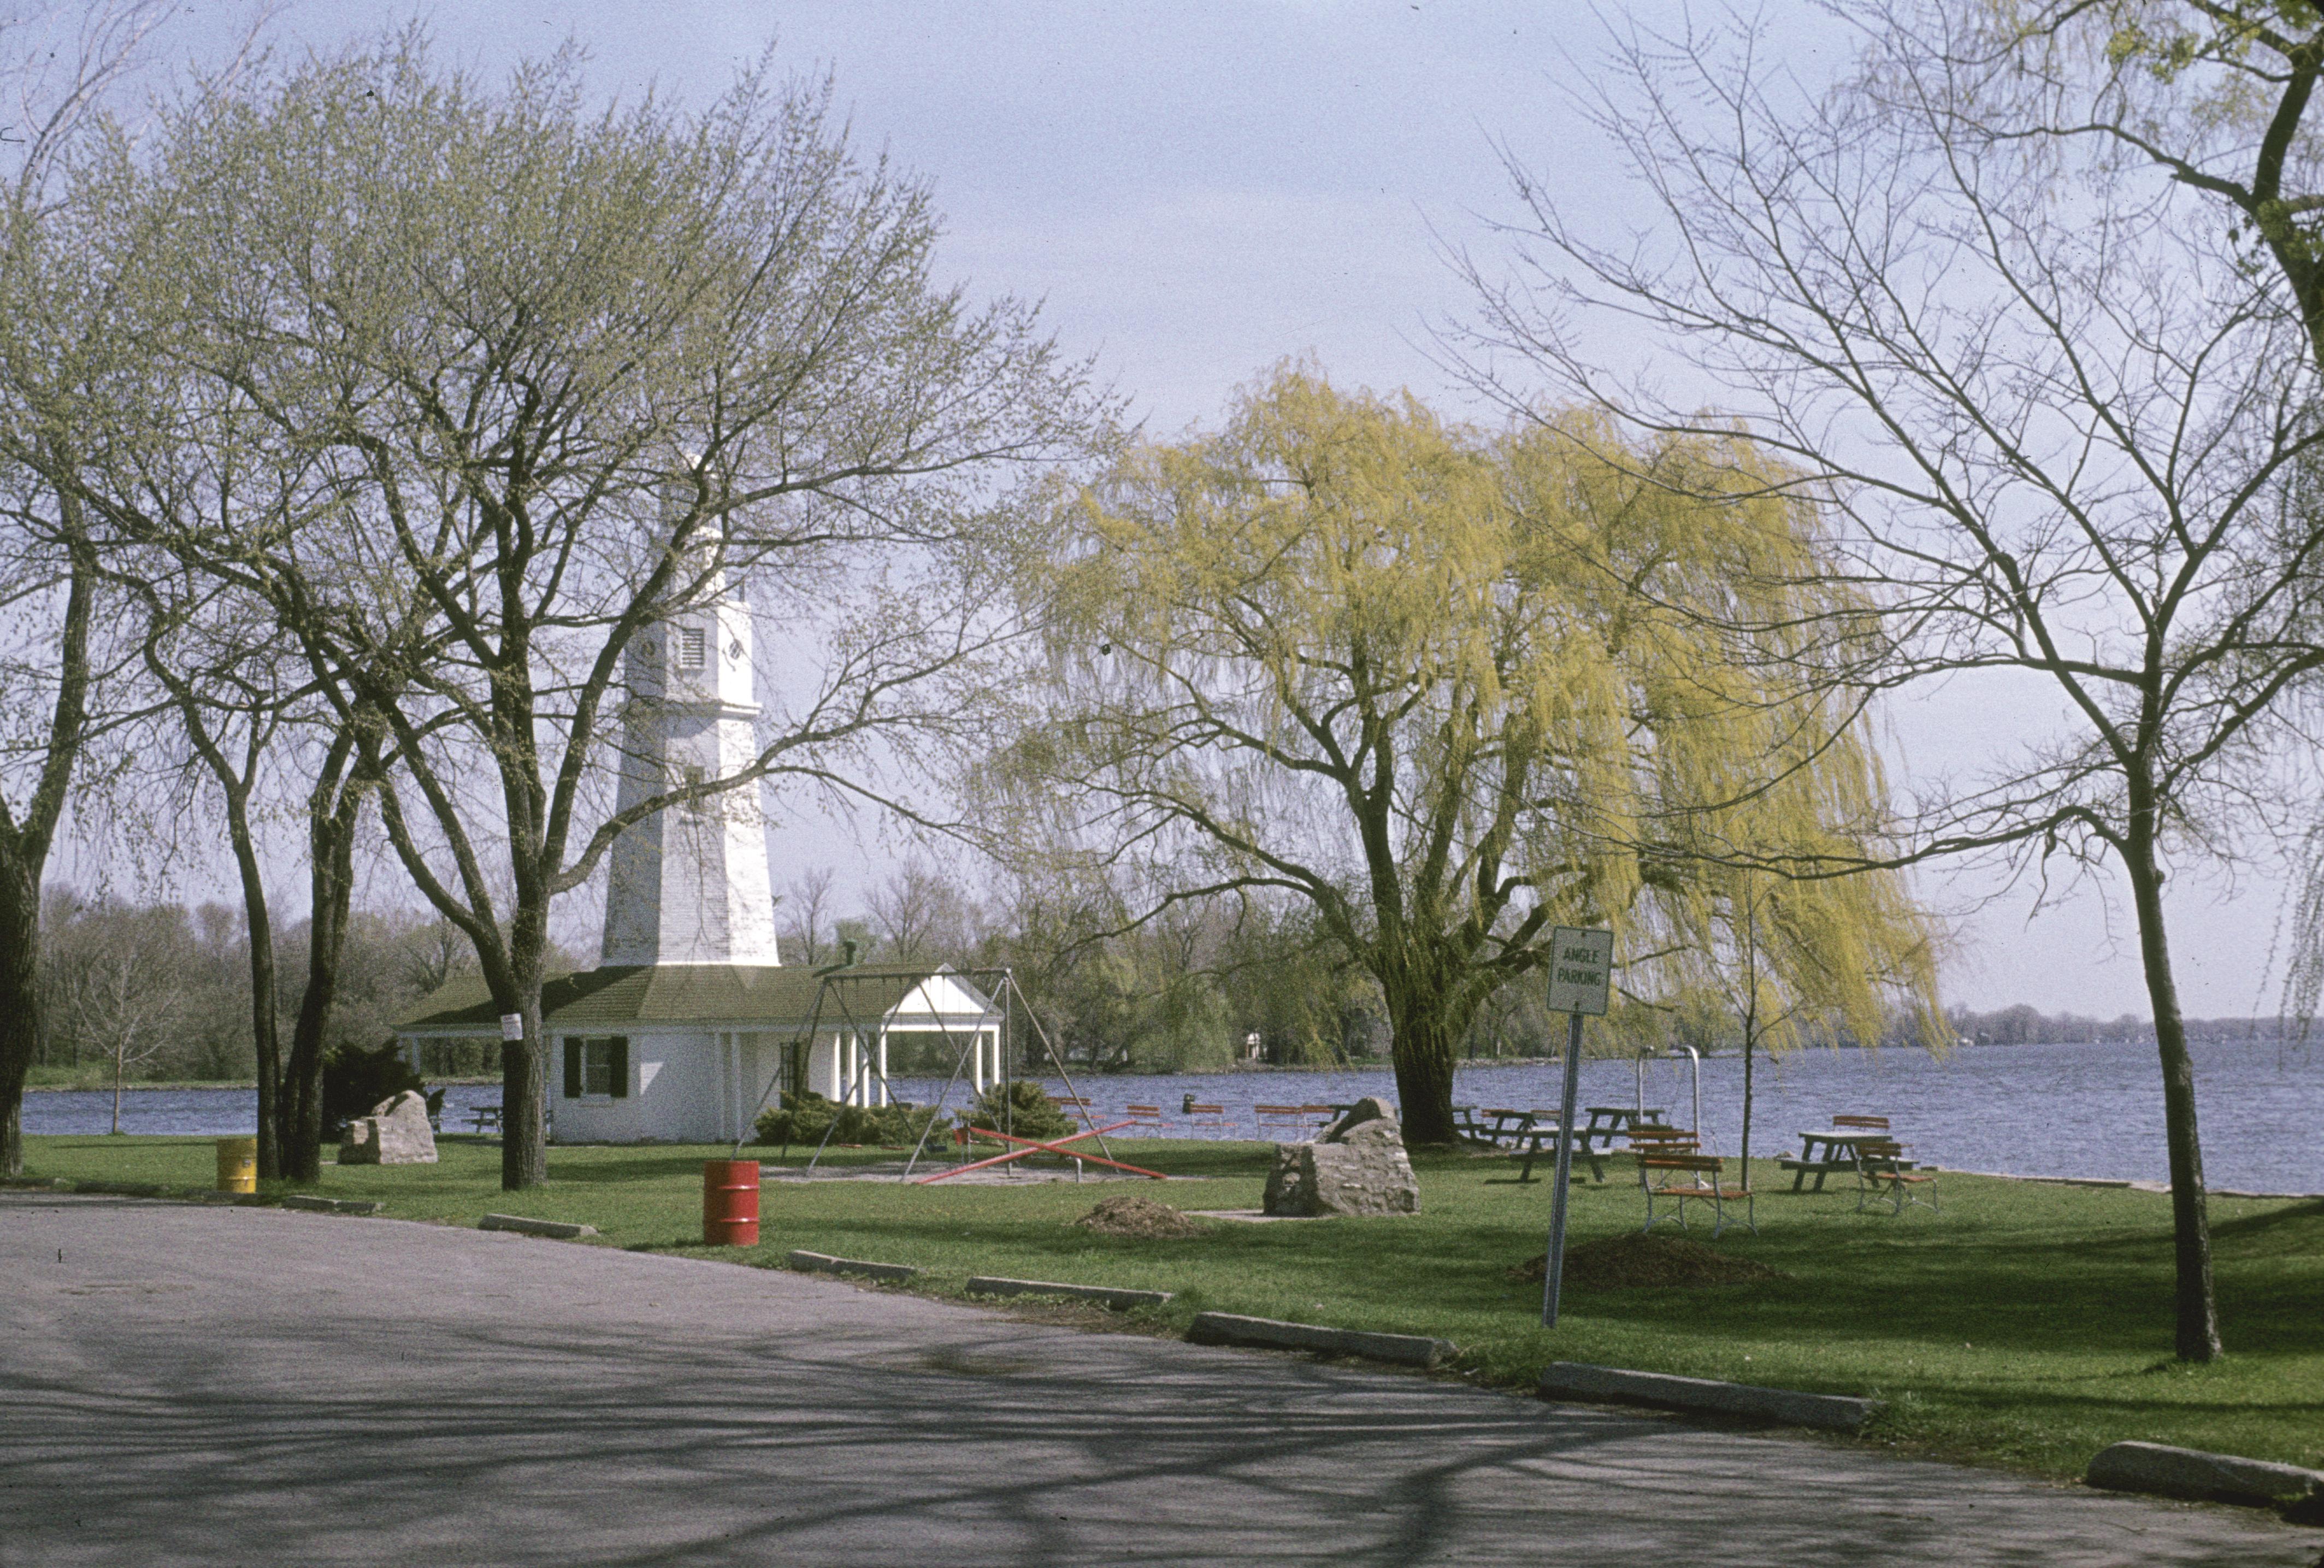 Two Rivers lighthouse - UWDC - UW-Madison Libraries